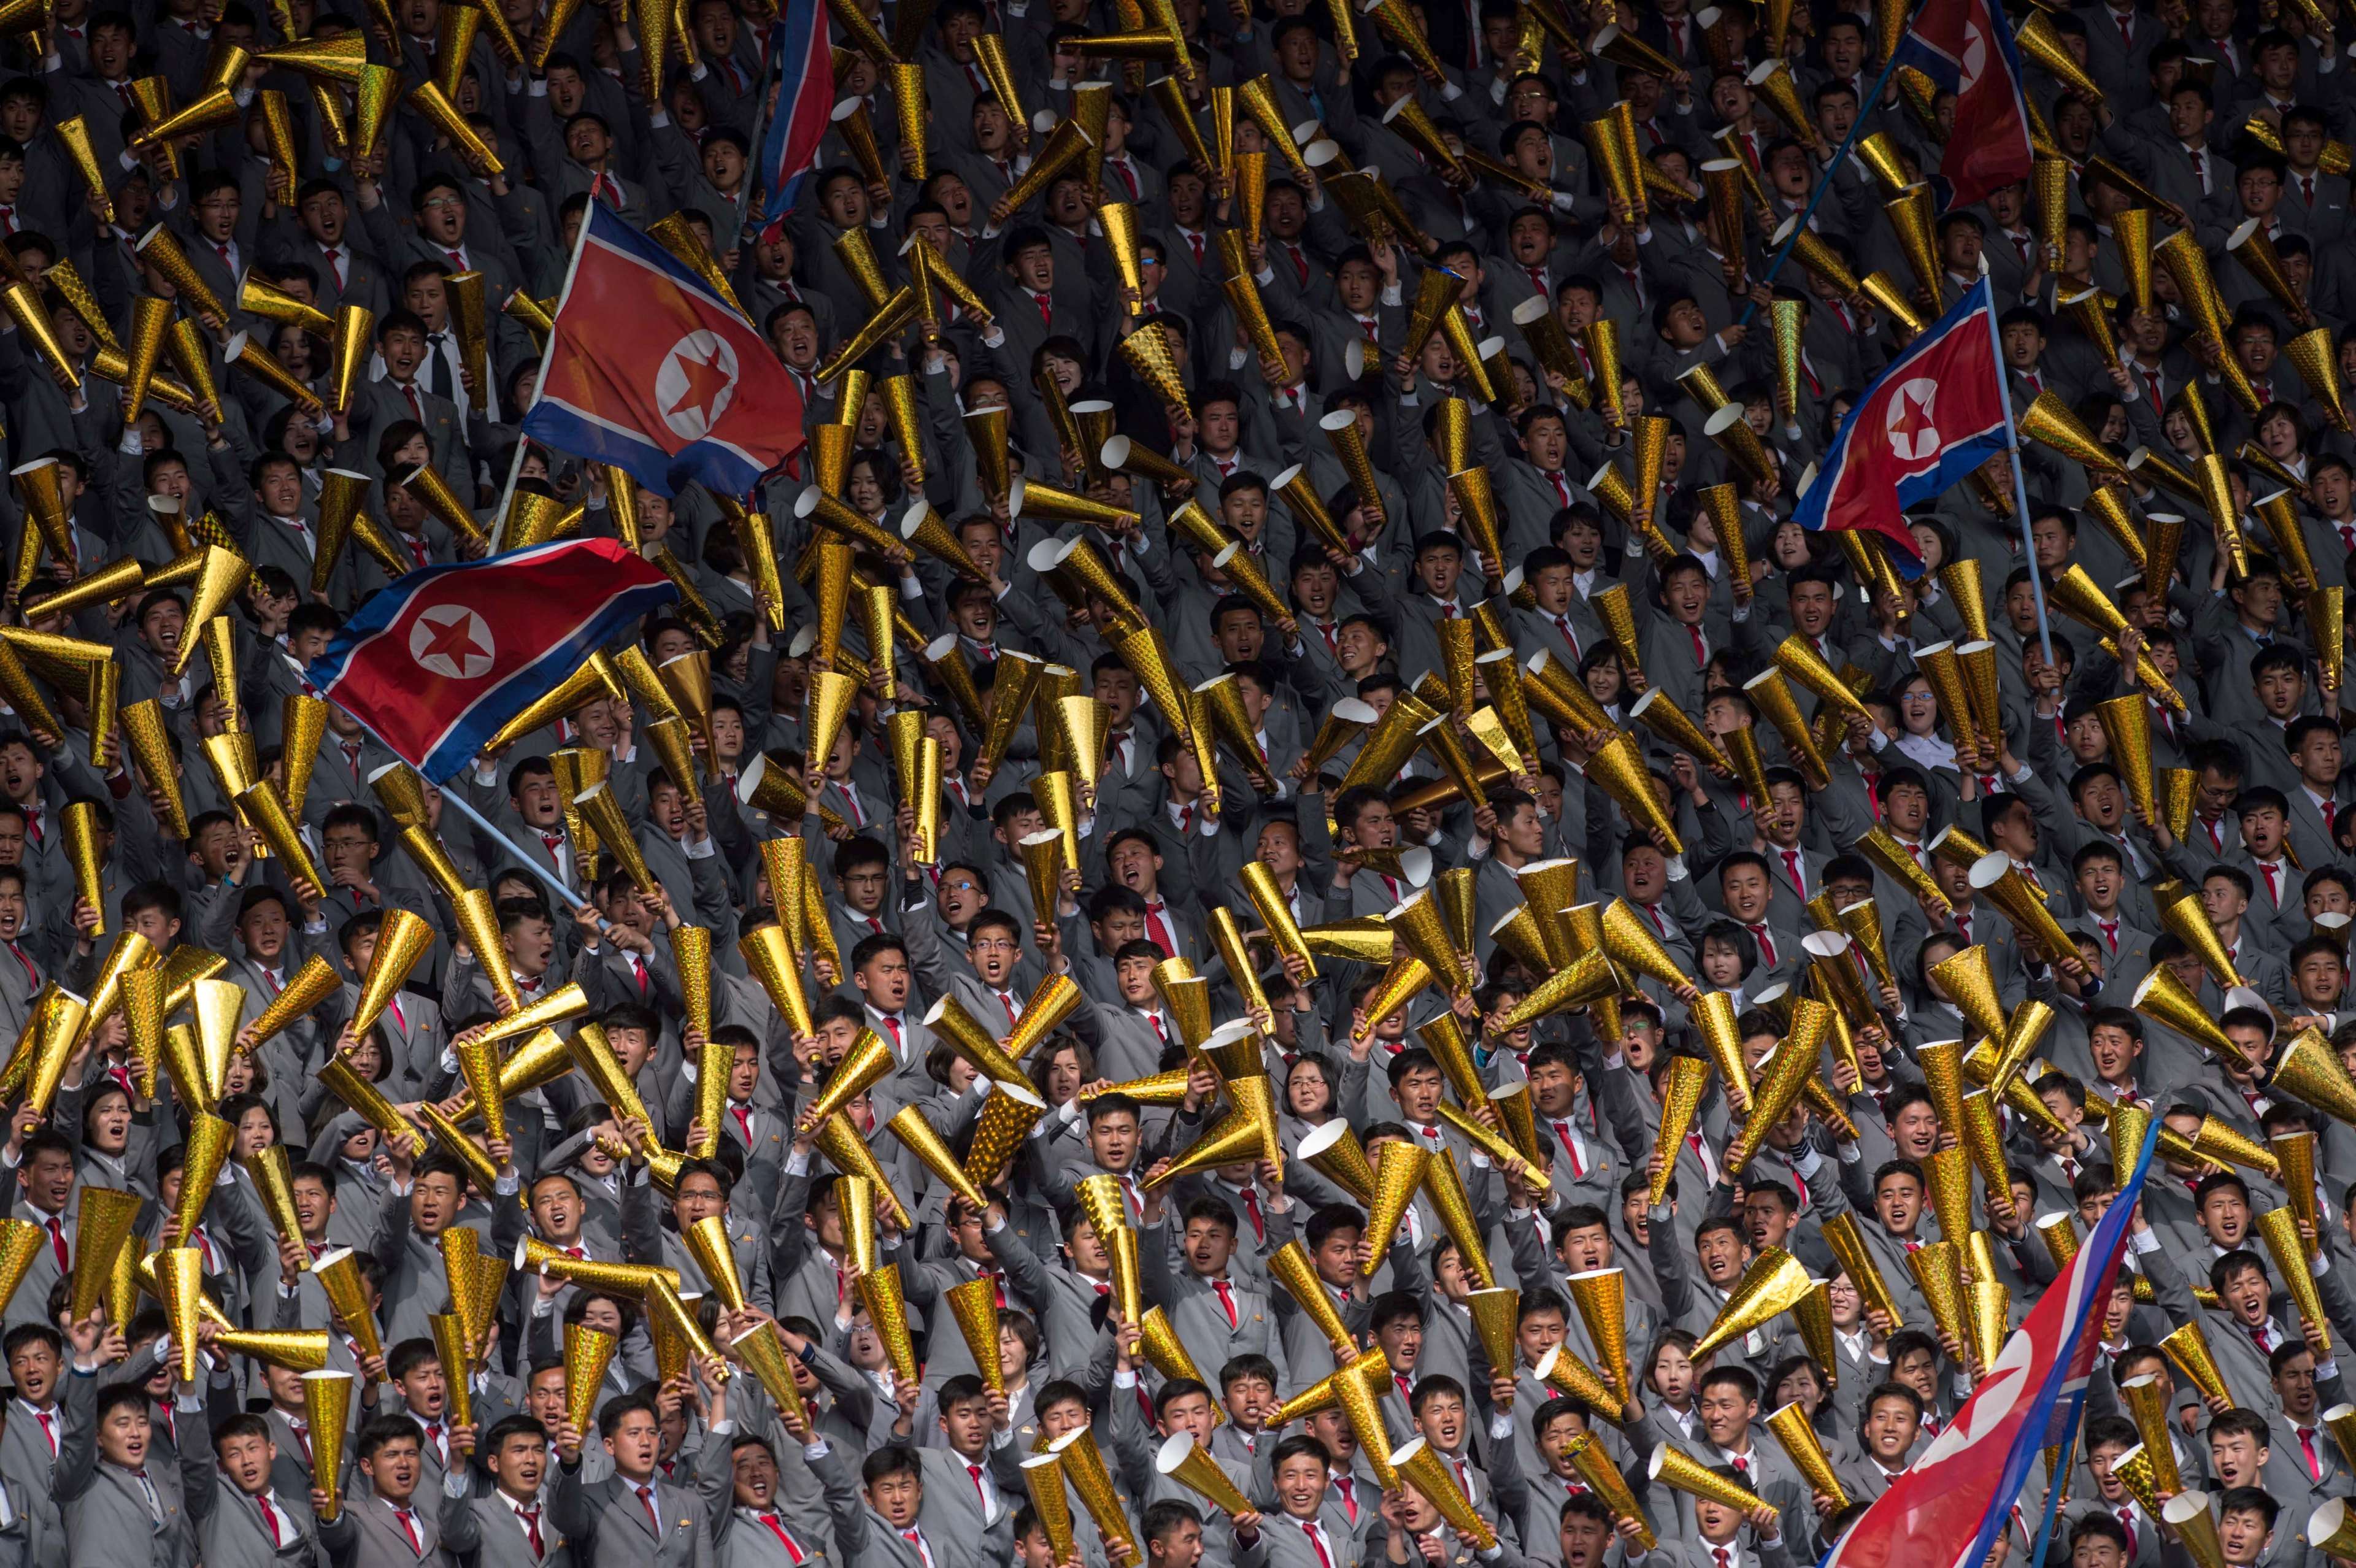 North Korea crowd